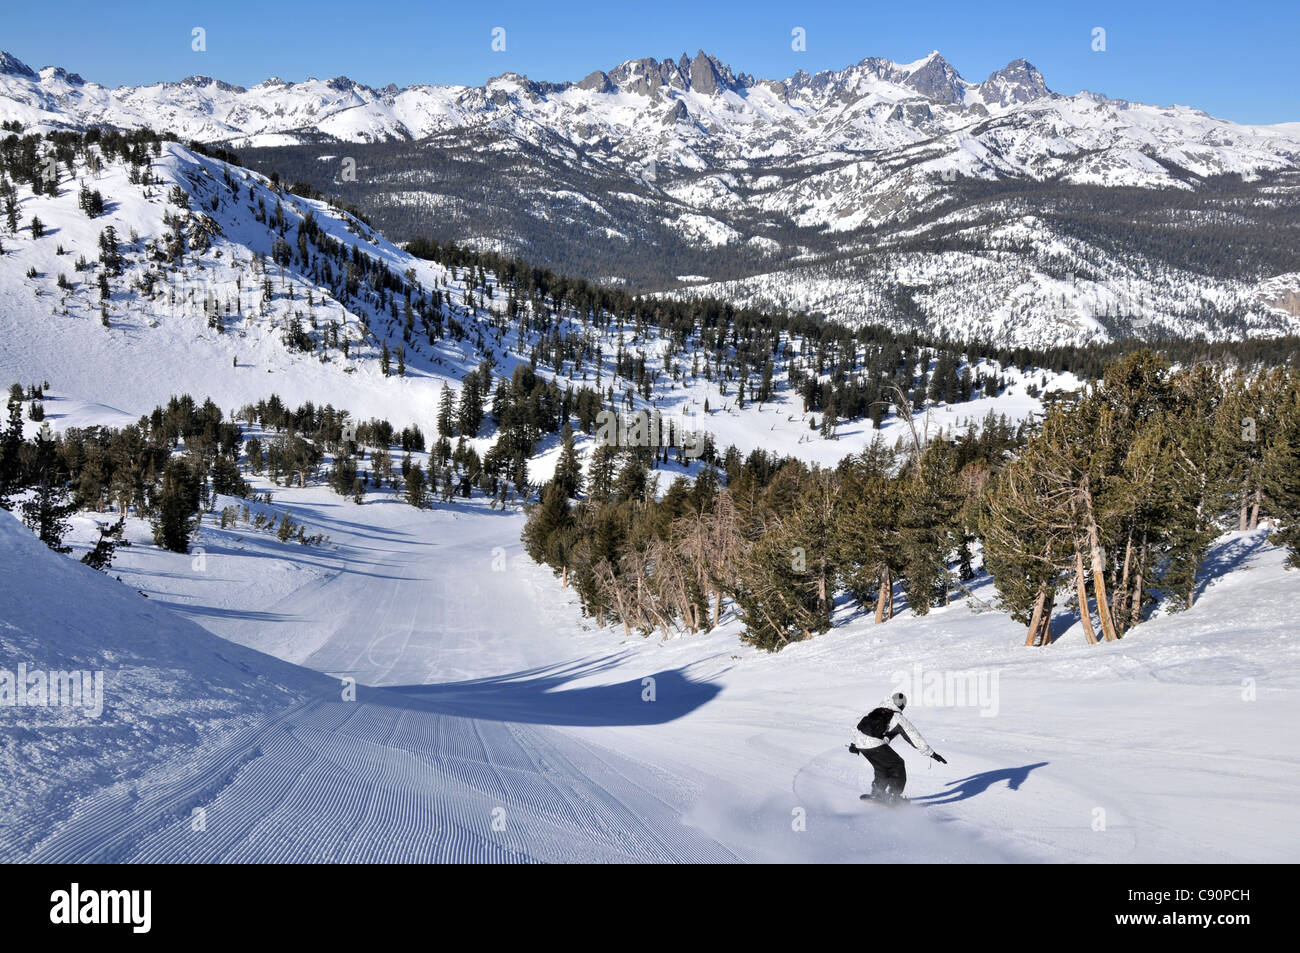 Snow boarder on the slopes at Mammoth Mountain ski area, California, USA, America Stock Photo